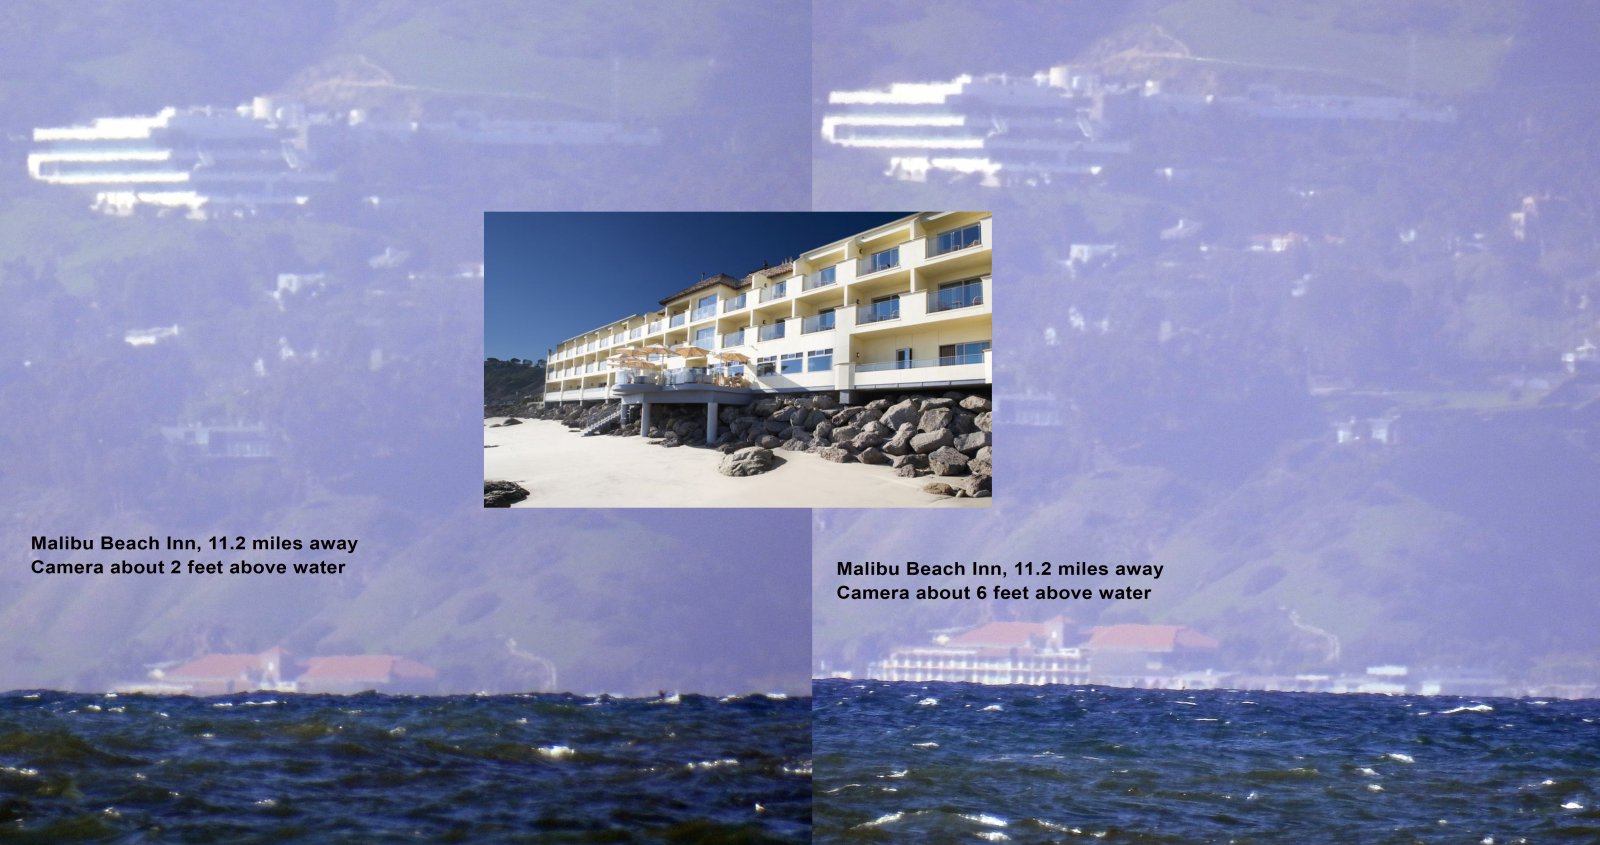 DSCN3065-Beach inn comparison.jpg